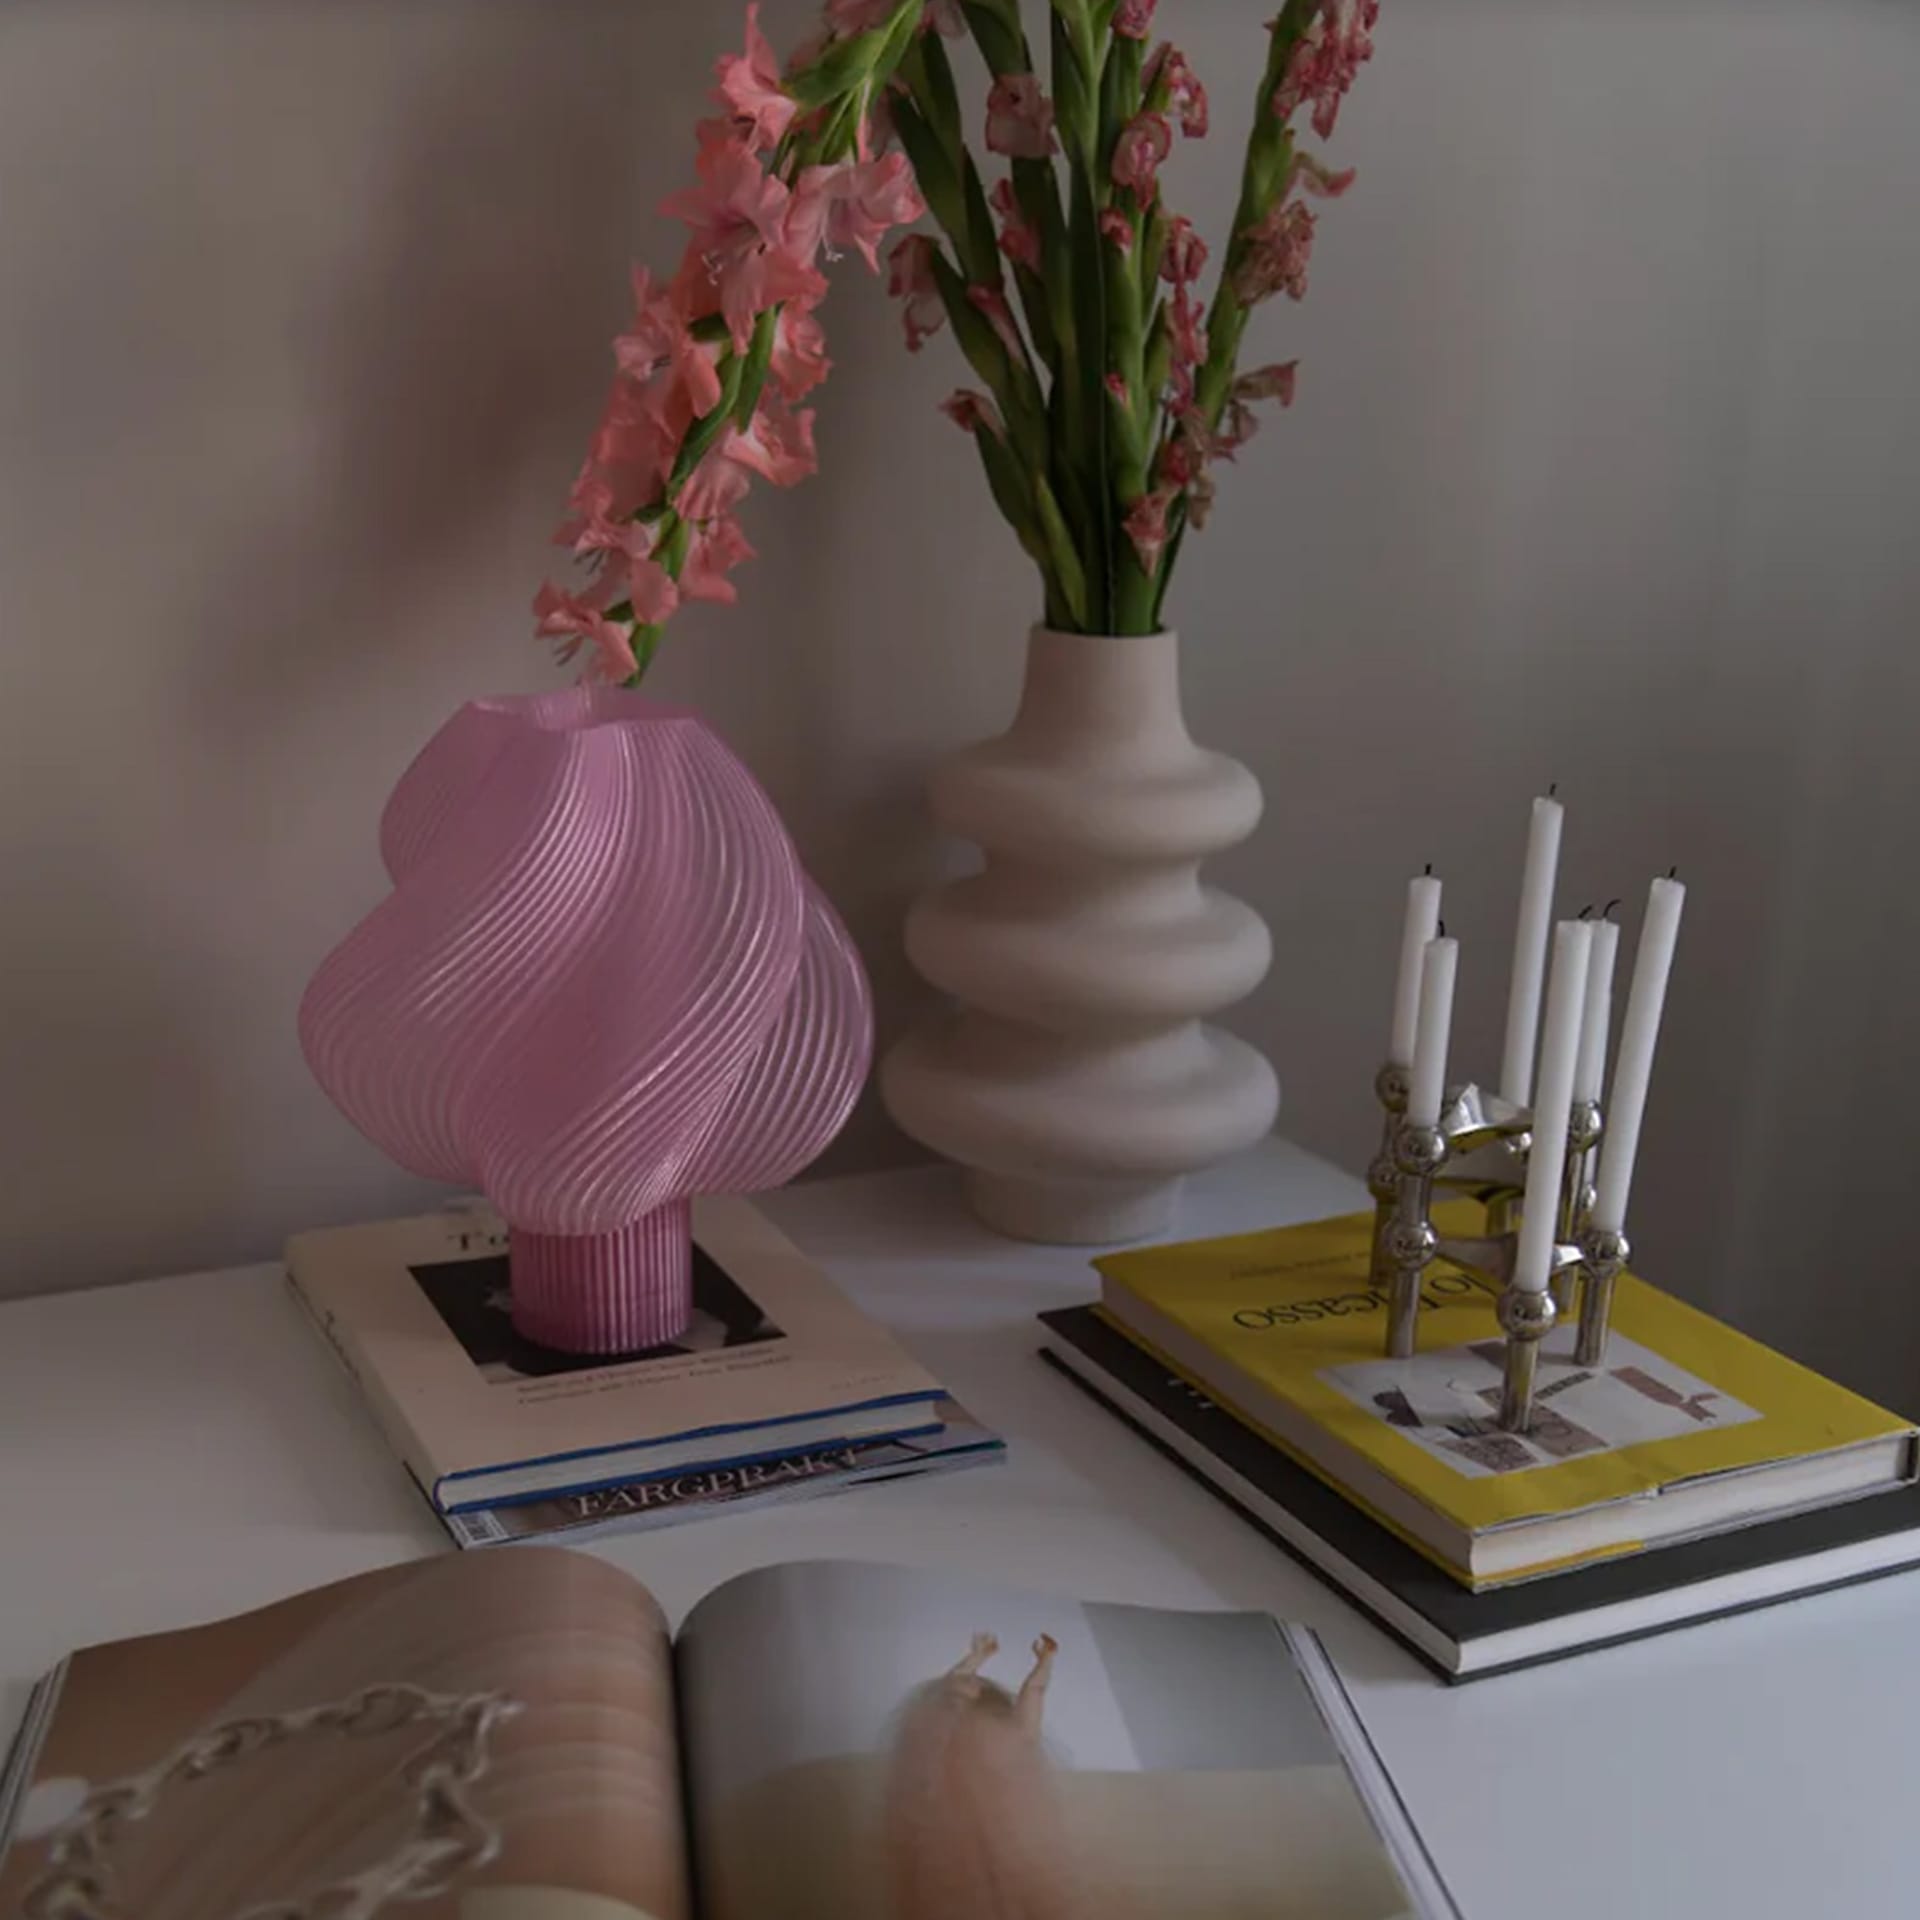 Soft Serve Table Lamp Regular - Rose Sorbet - Crème Atelier - NO GA